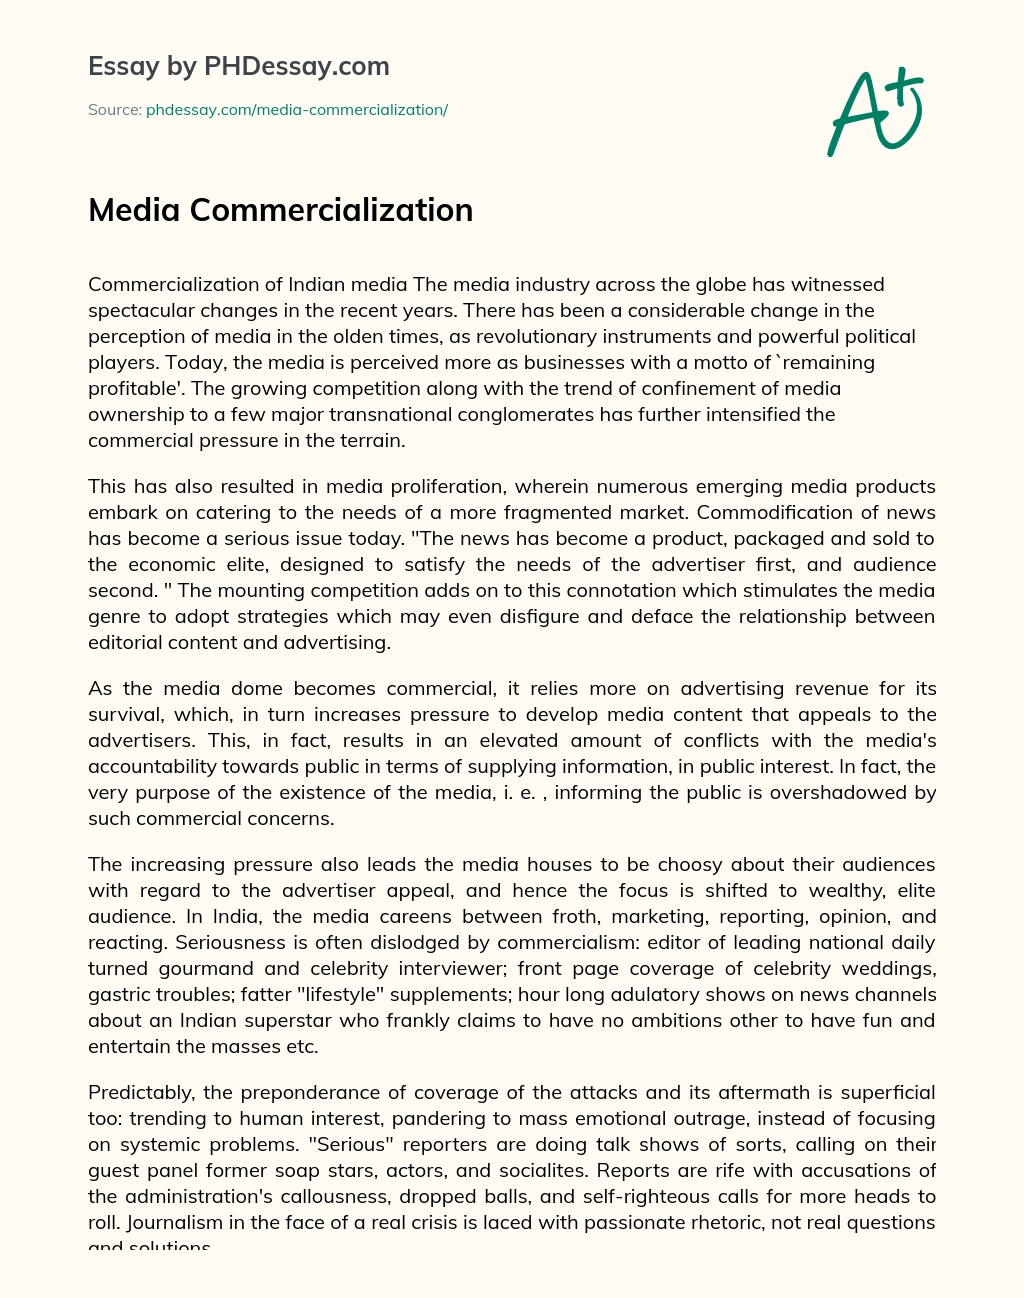 Media Commercialization essay